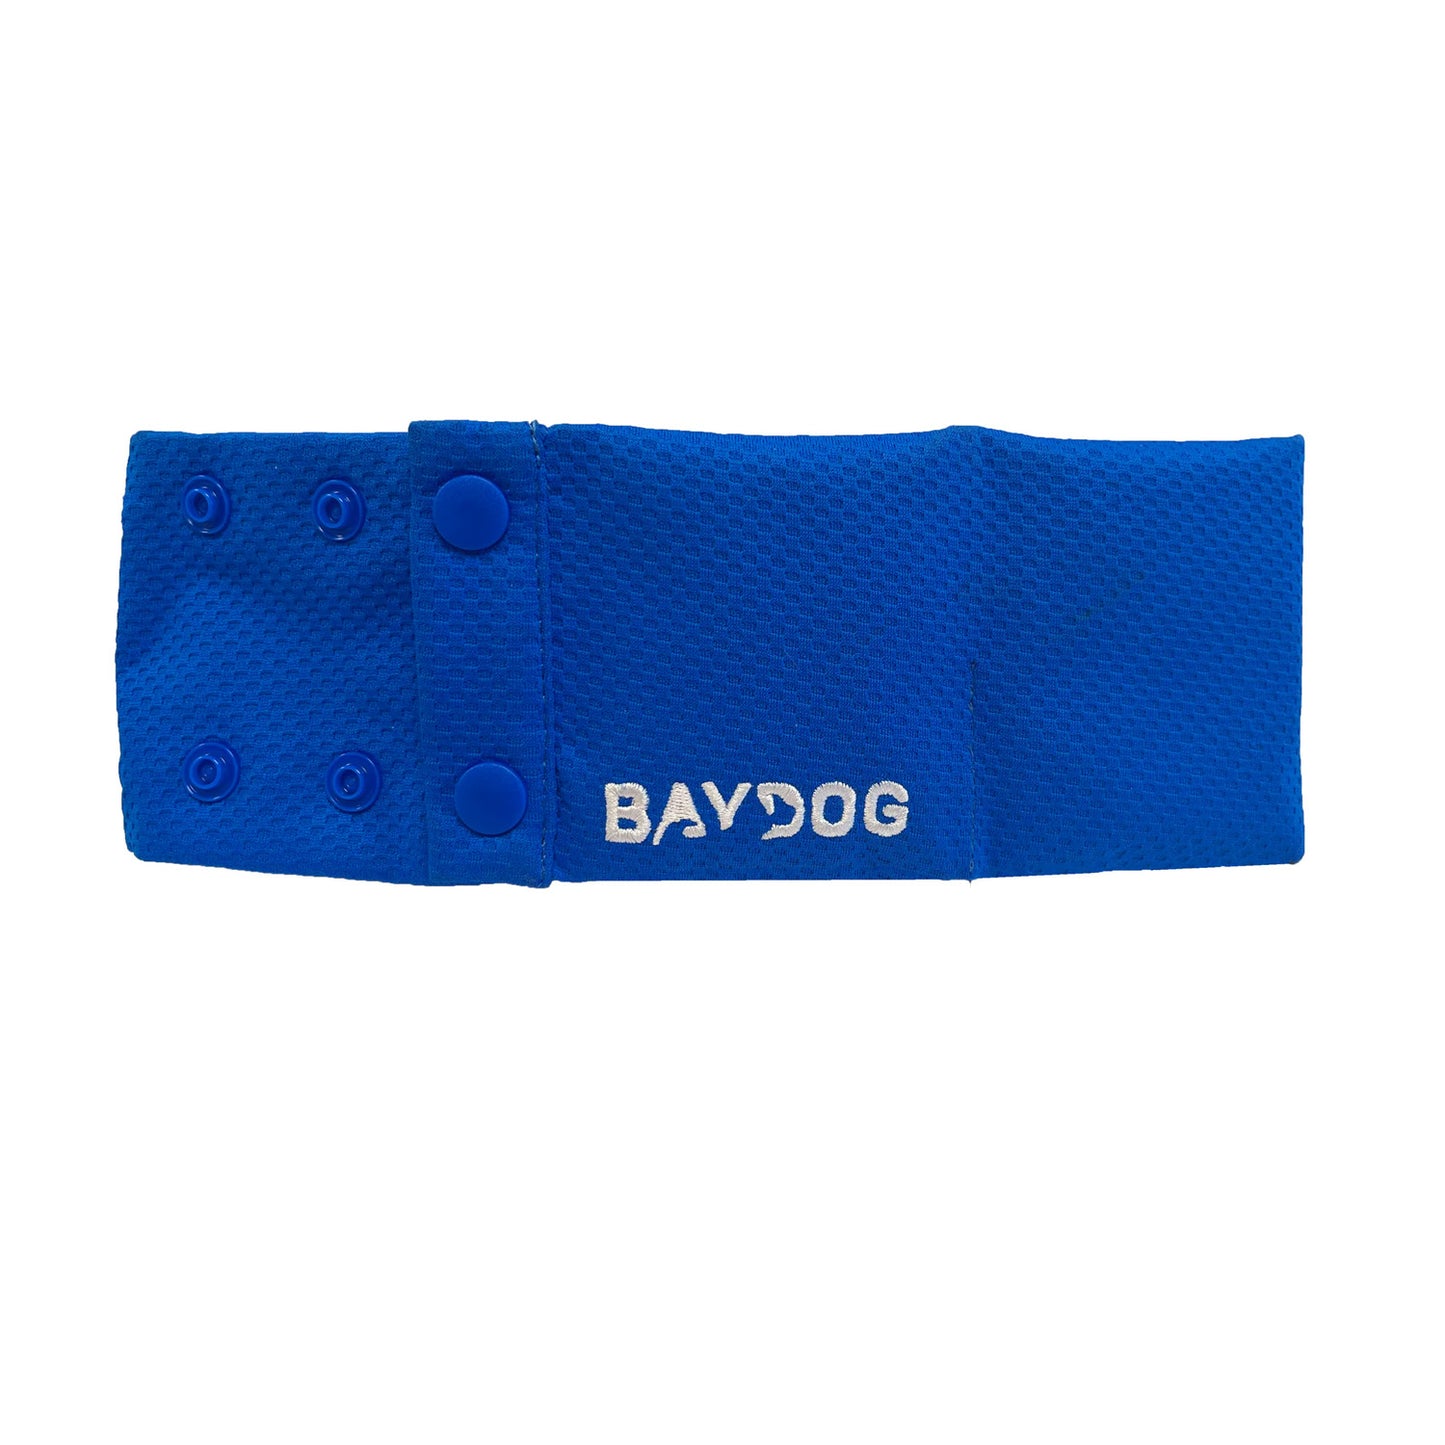 Arctic Bay Cooling Collar by Baydog